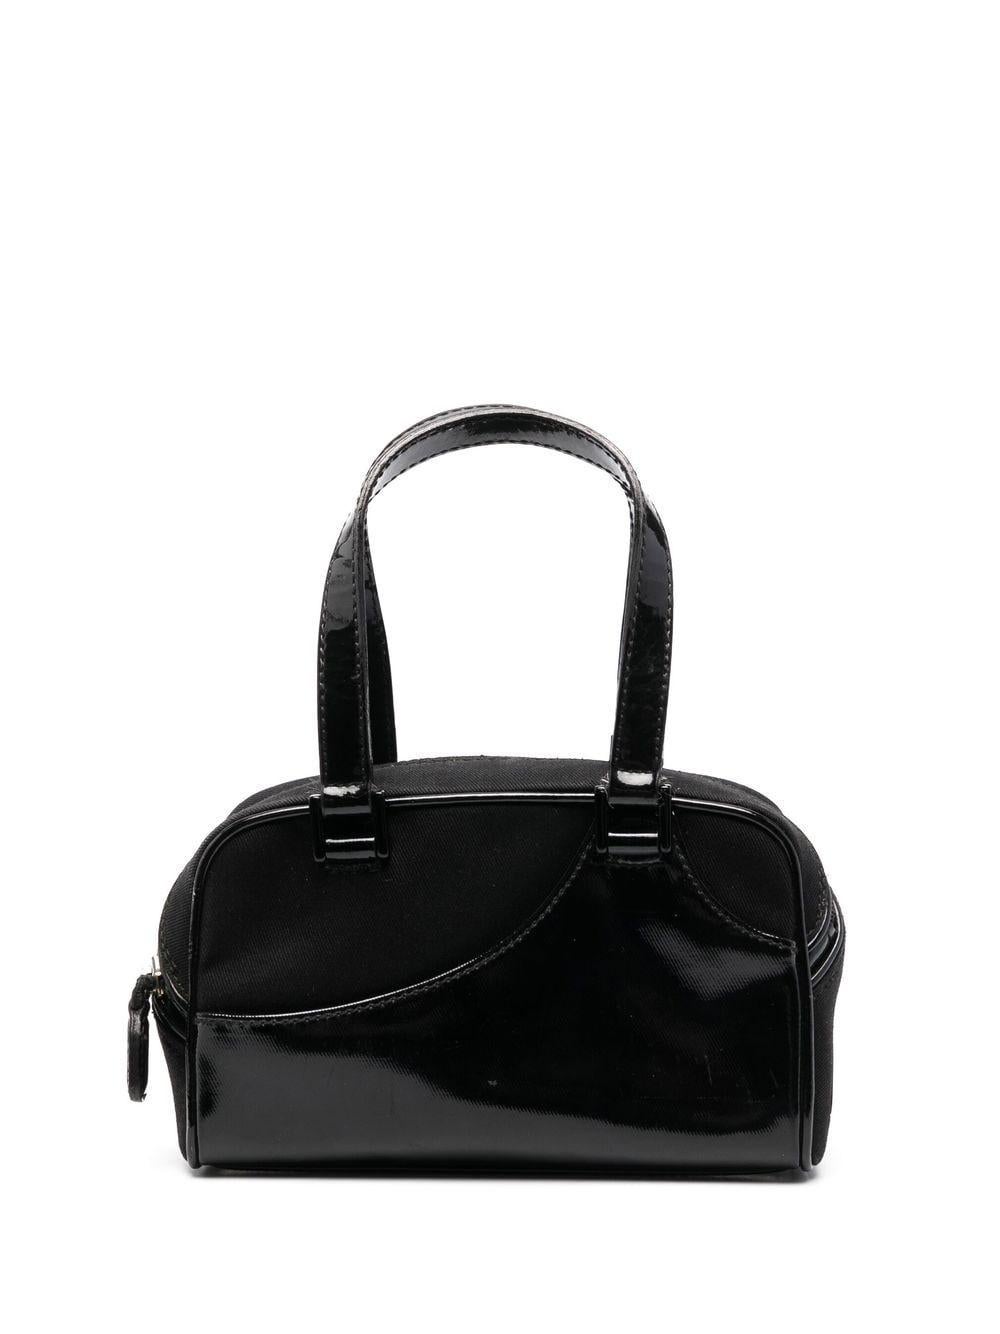 Christian Dior Black Patent Mini Handbag For Sale 2